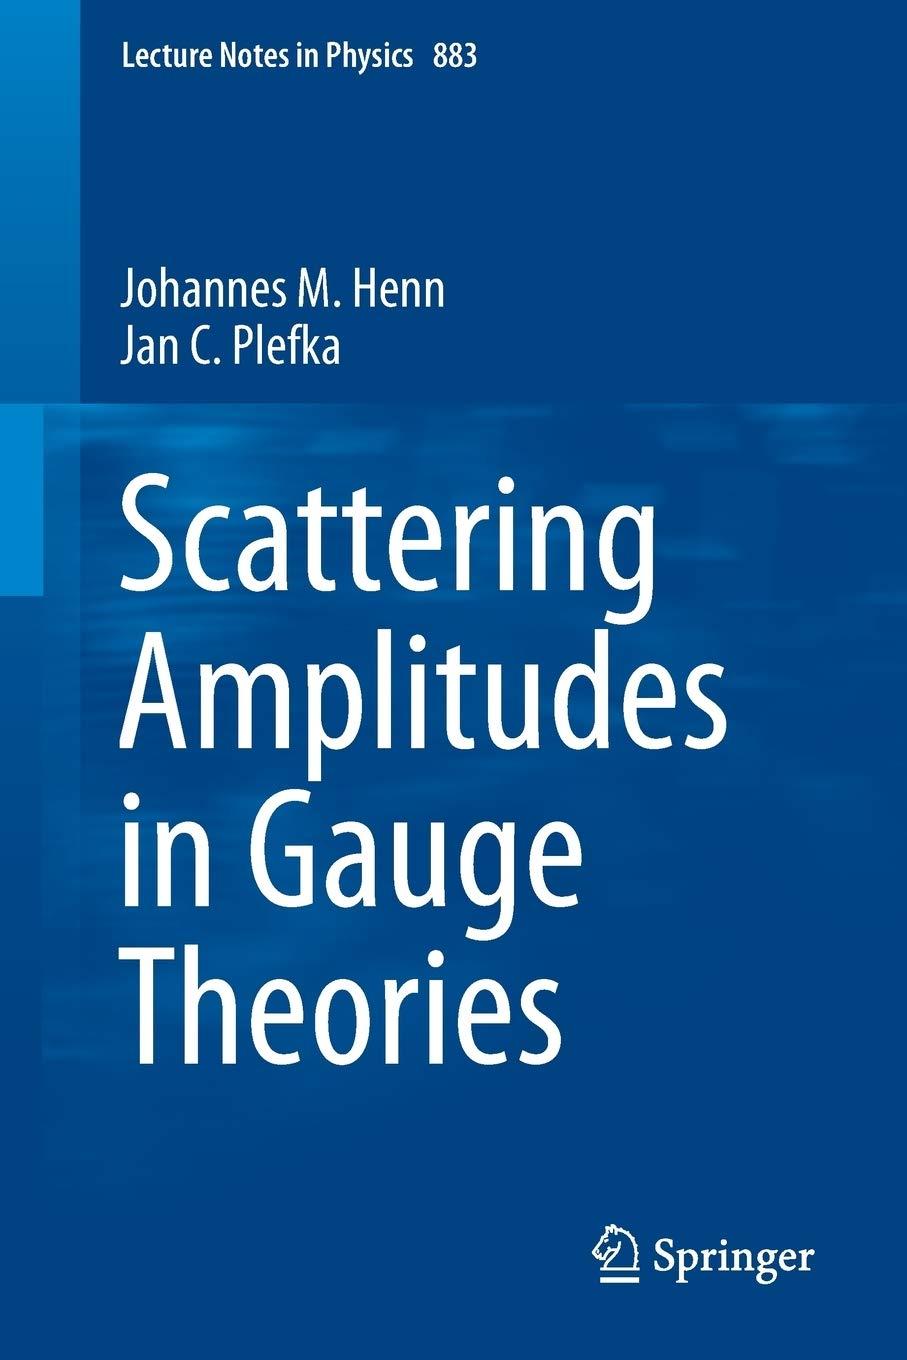 scattering amplitudes in gauge theories 1st edition johannes m. henn, jan c. plefka 364254021x, 978-3642540219